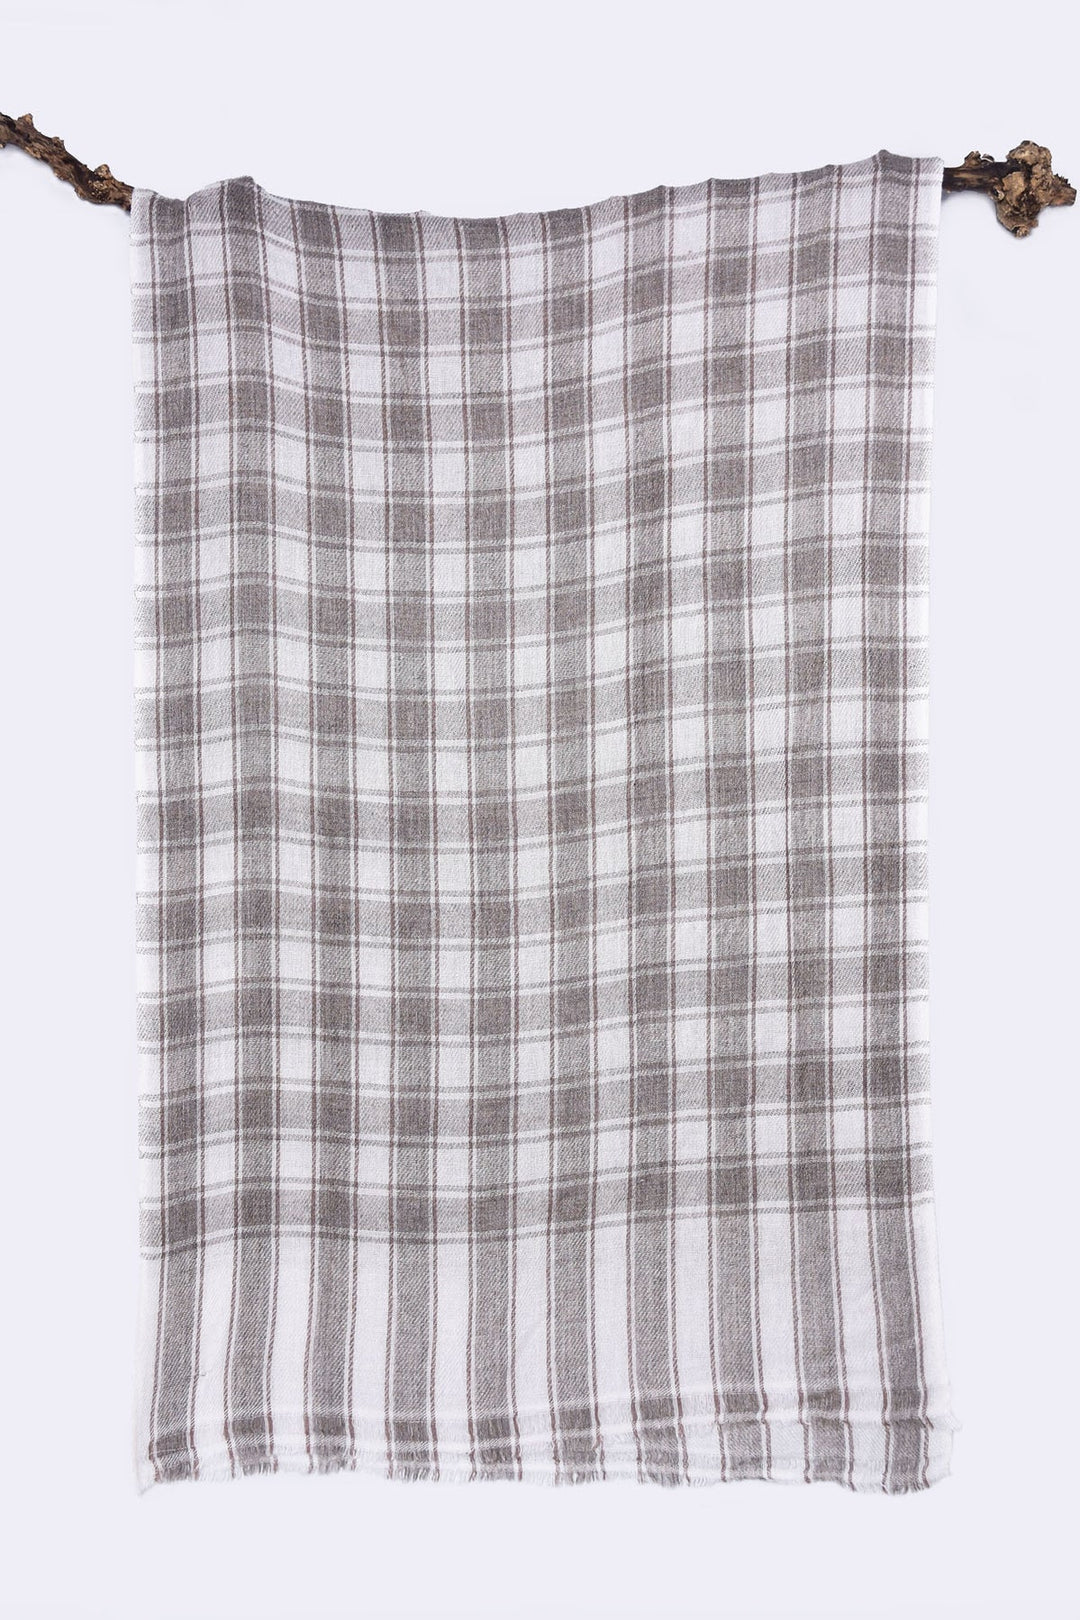 Cashmere Stole - Liberty White & Gray | Saorsa Handwoven Soft Cashmere Stole - White & Gray